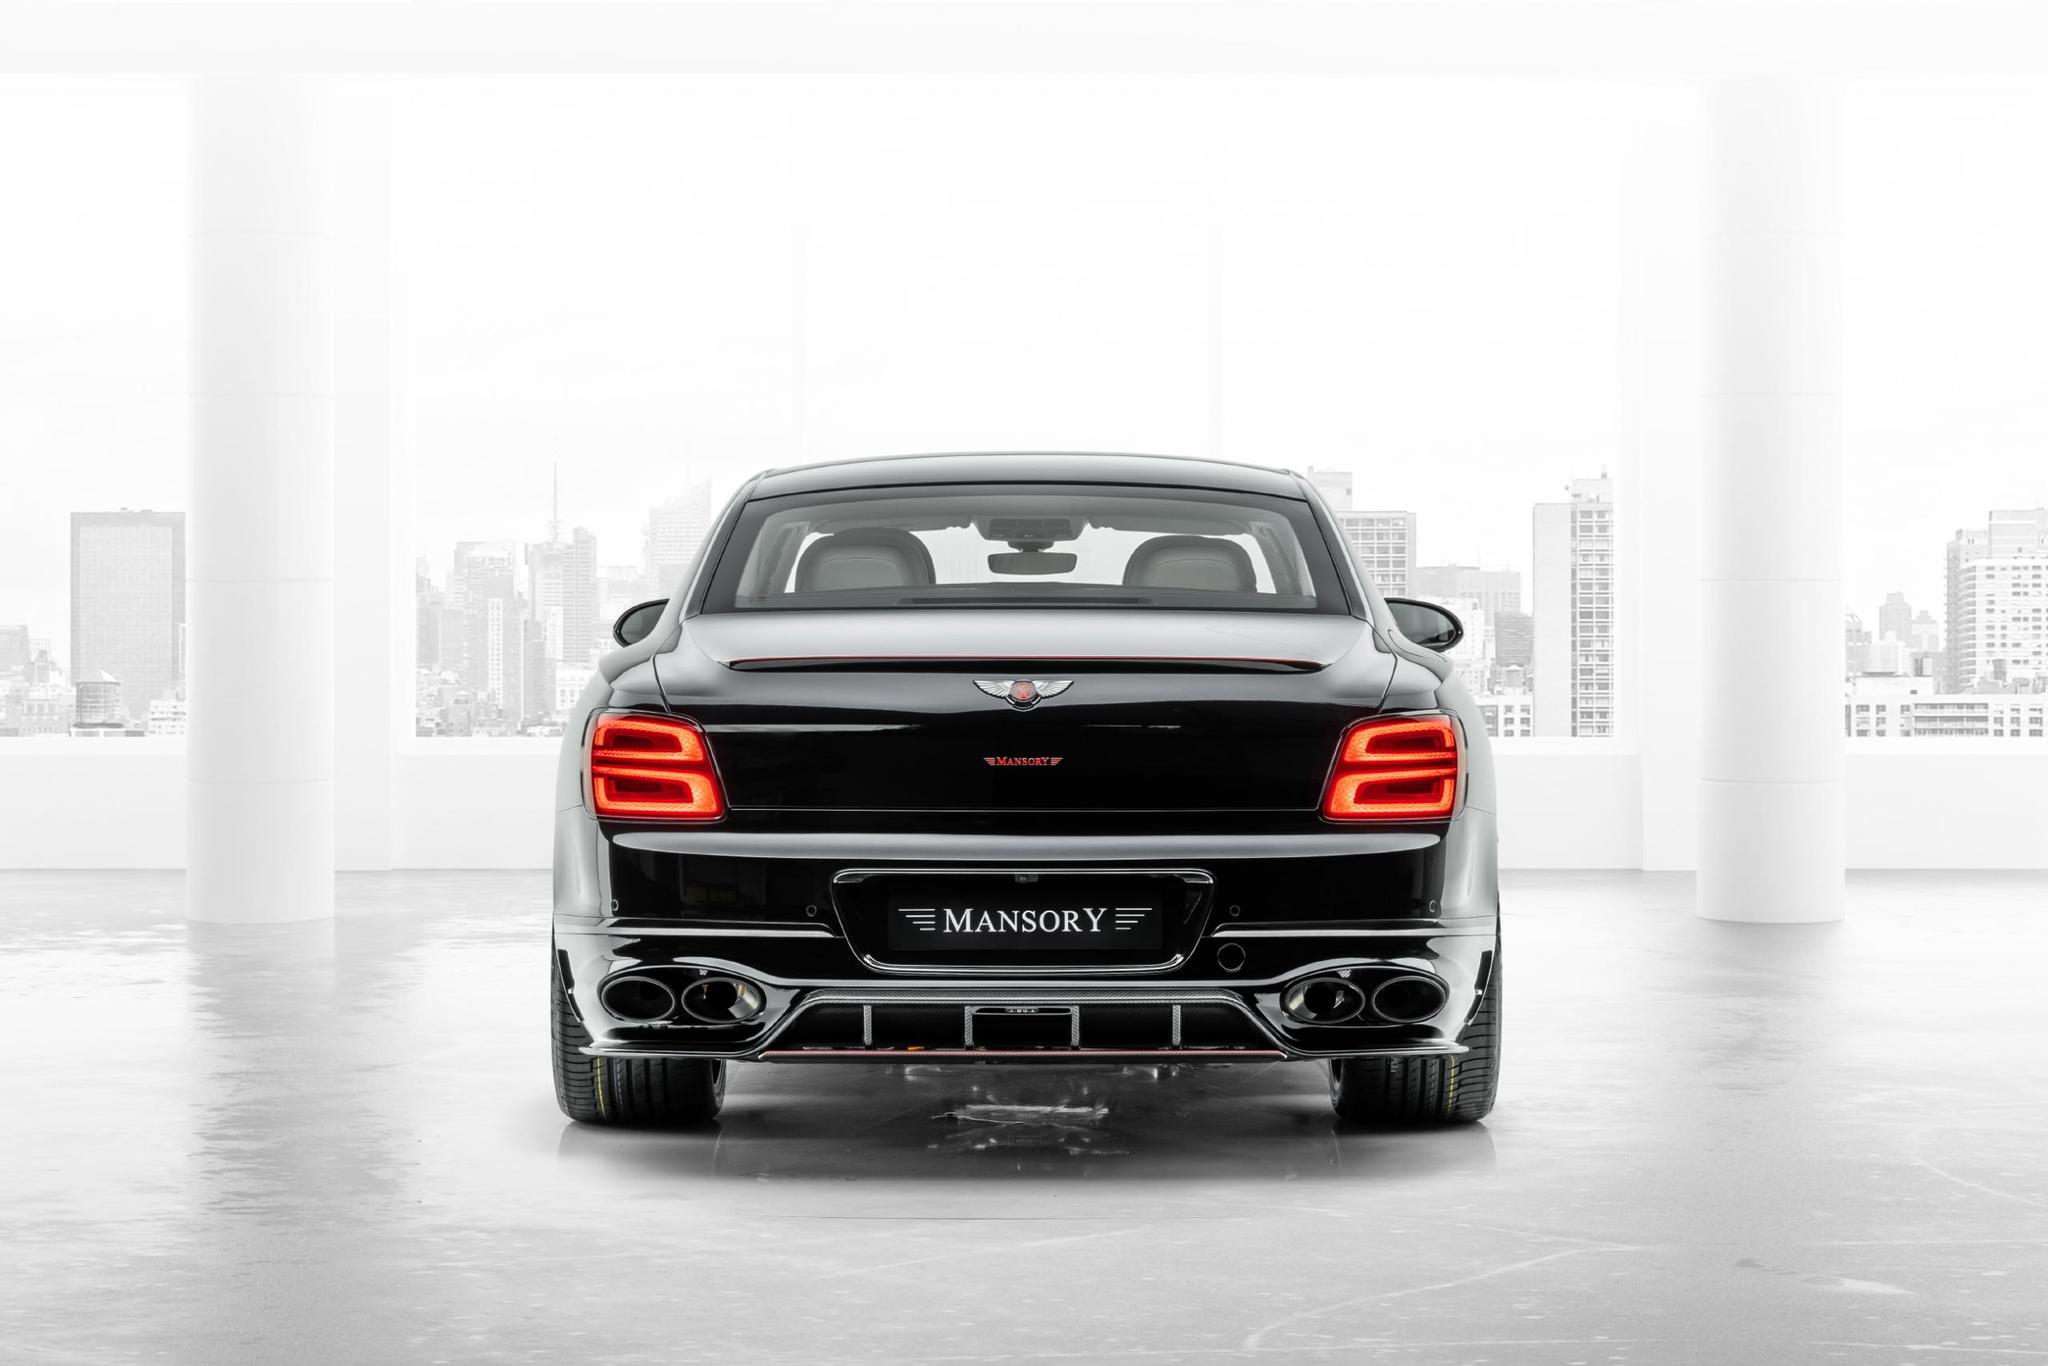 Mansory body kit for Bentley Flying Spur latest model